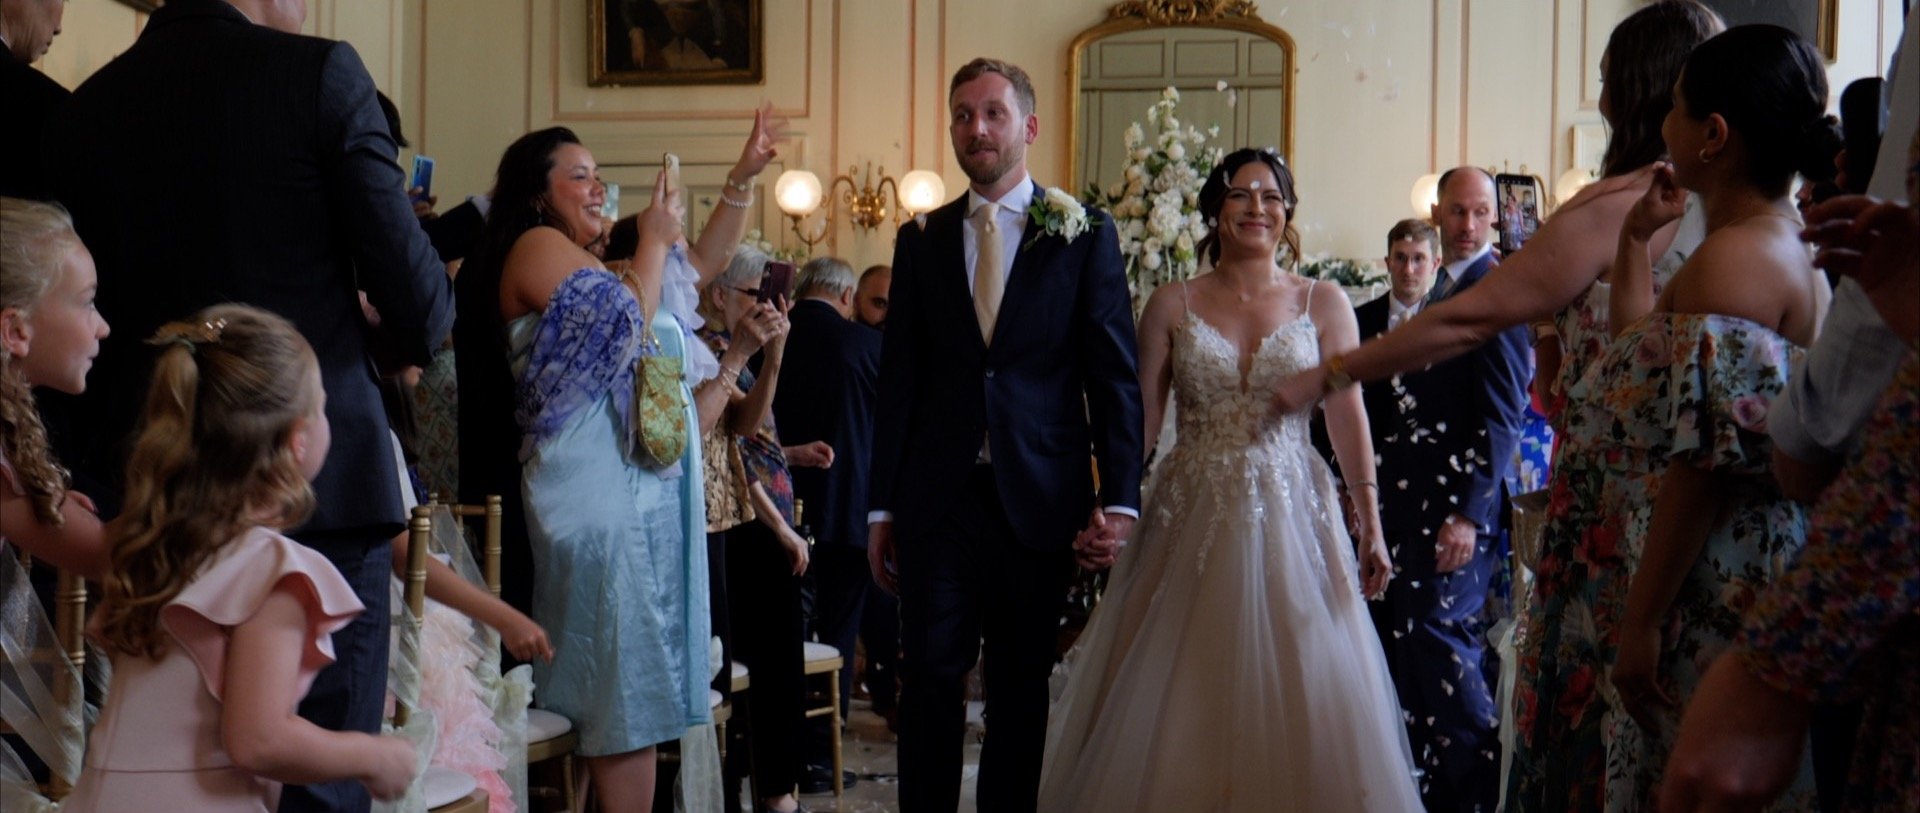 Just married - confetti at Gosfield Hall - Essex.jpg